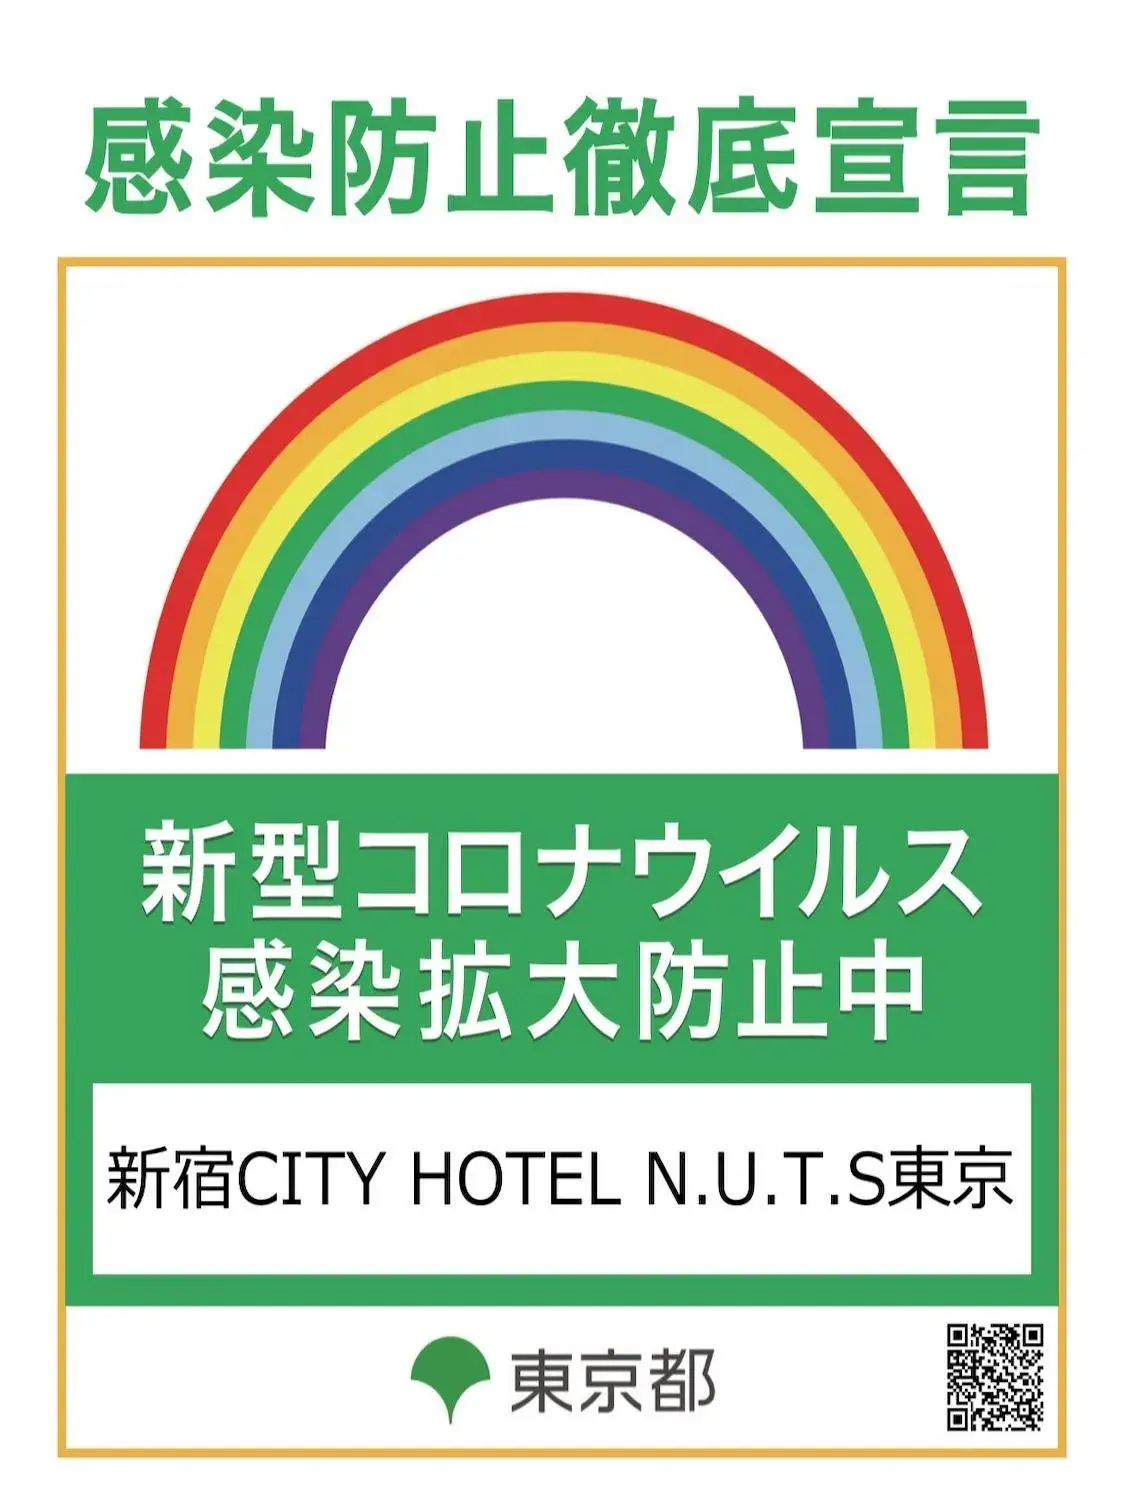 Logo/Certificate/Sign in Shinjuku City Hotel N.U.T.S Tokyo